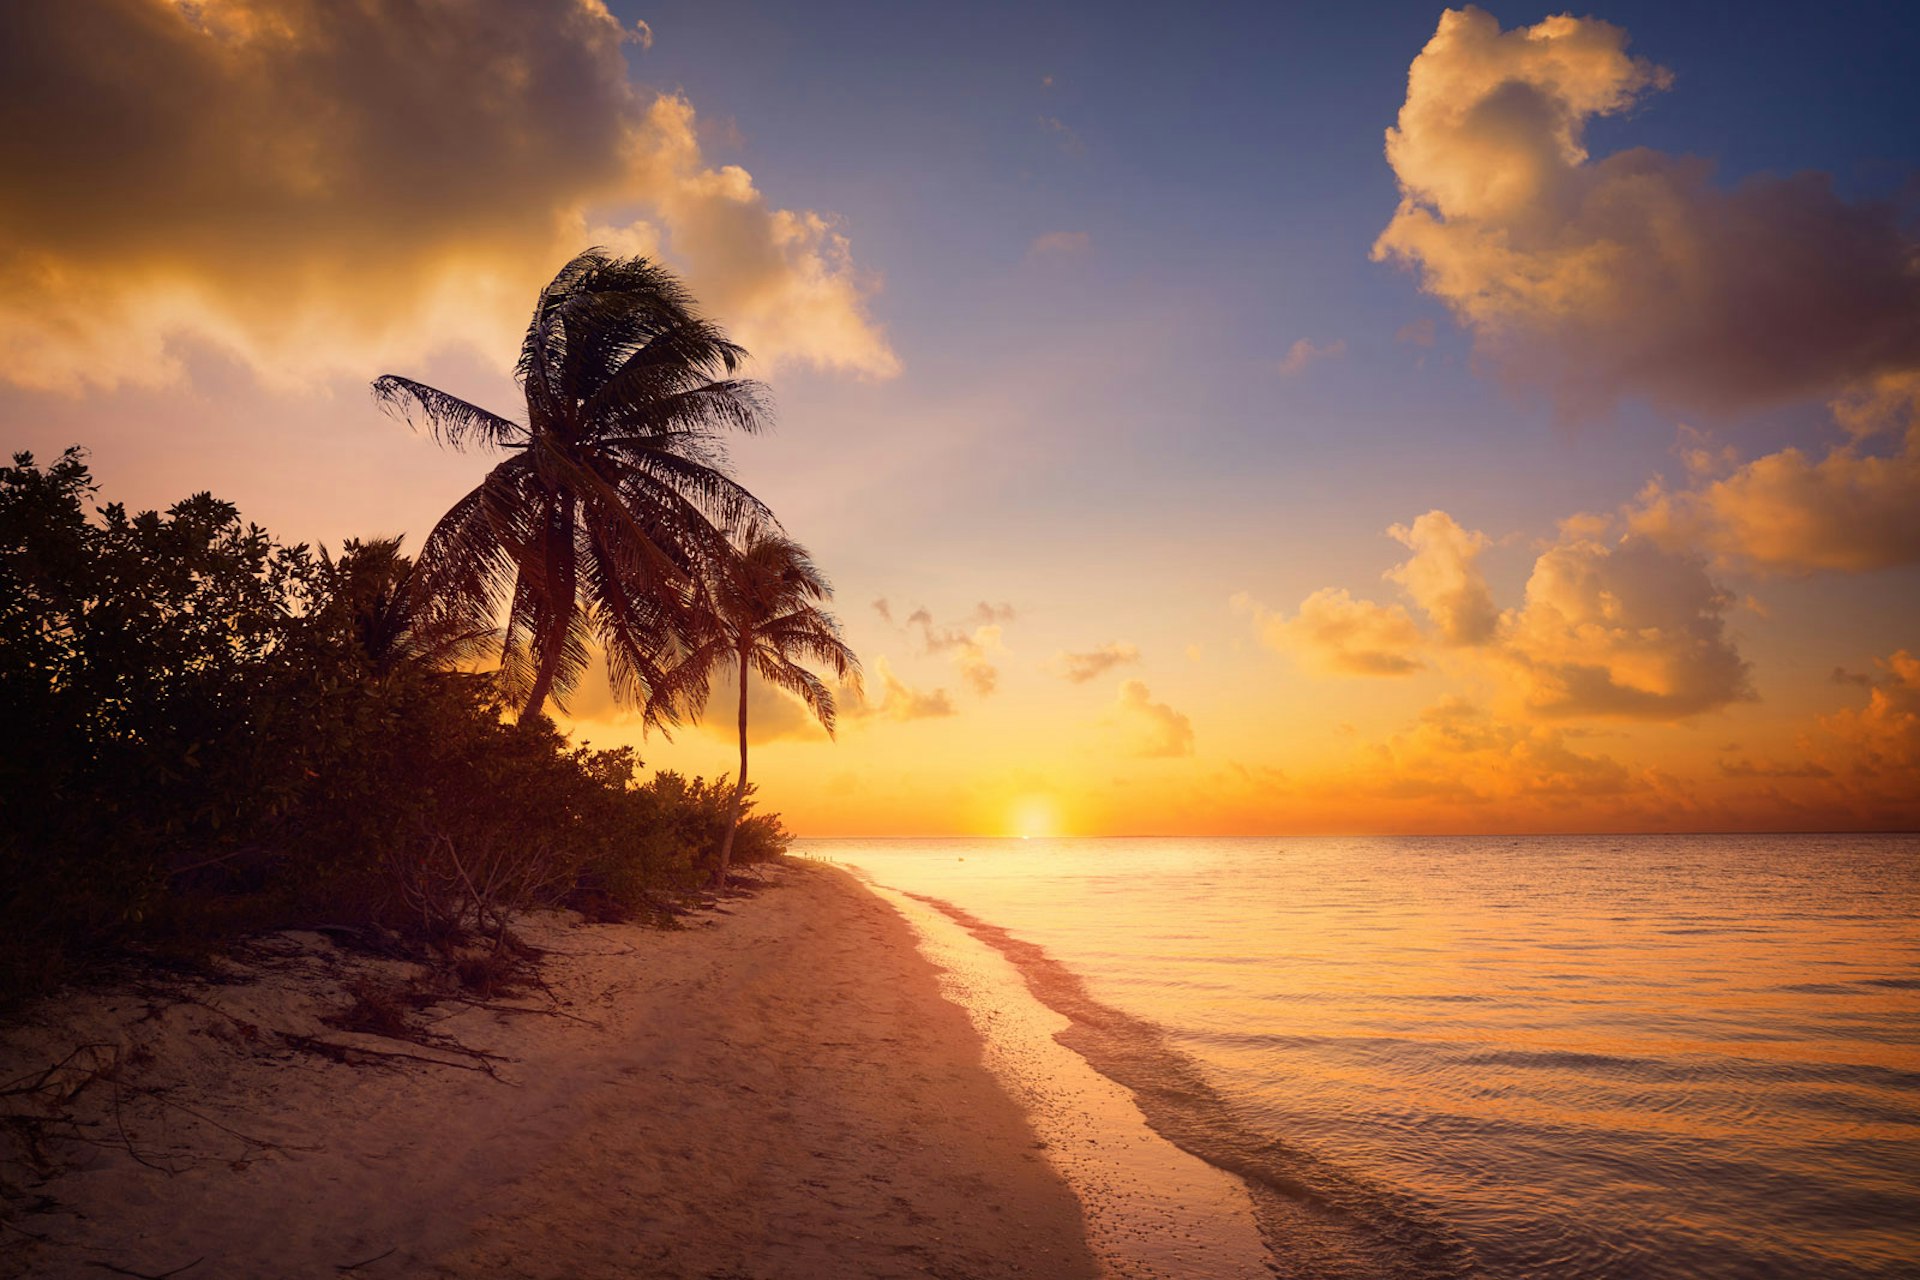 The sun casts golden light on a palm lined beach